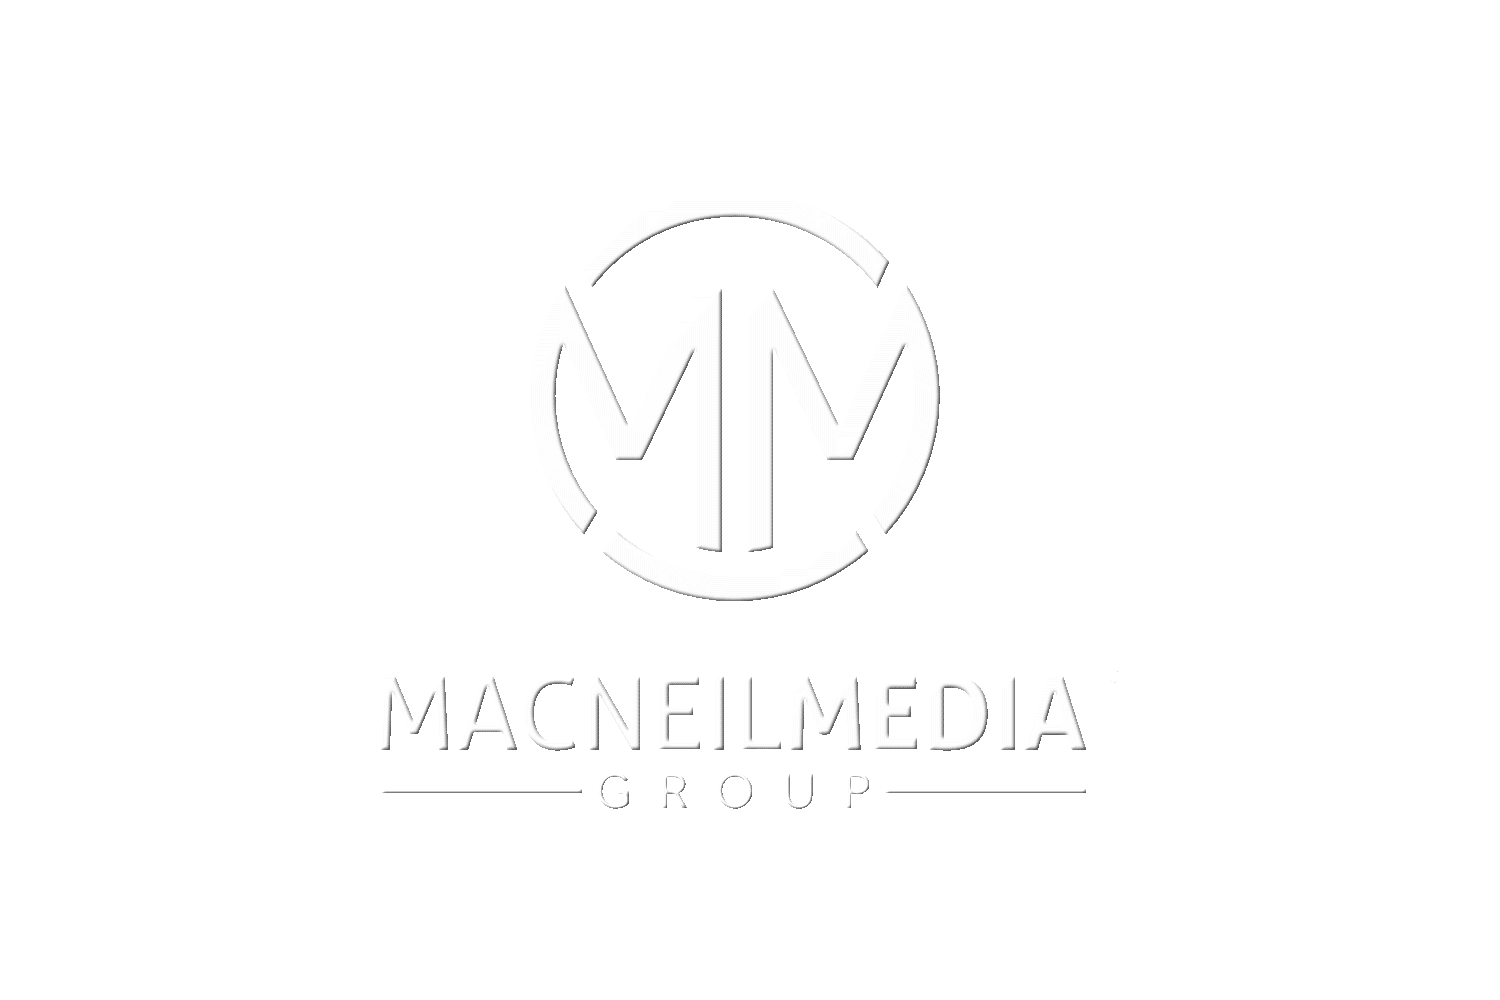 MacNeil Media Group, LLC